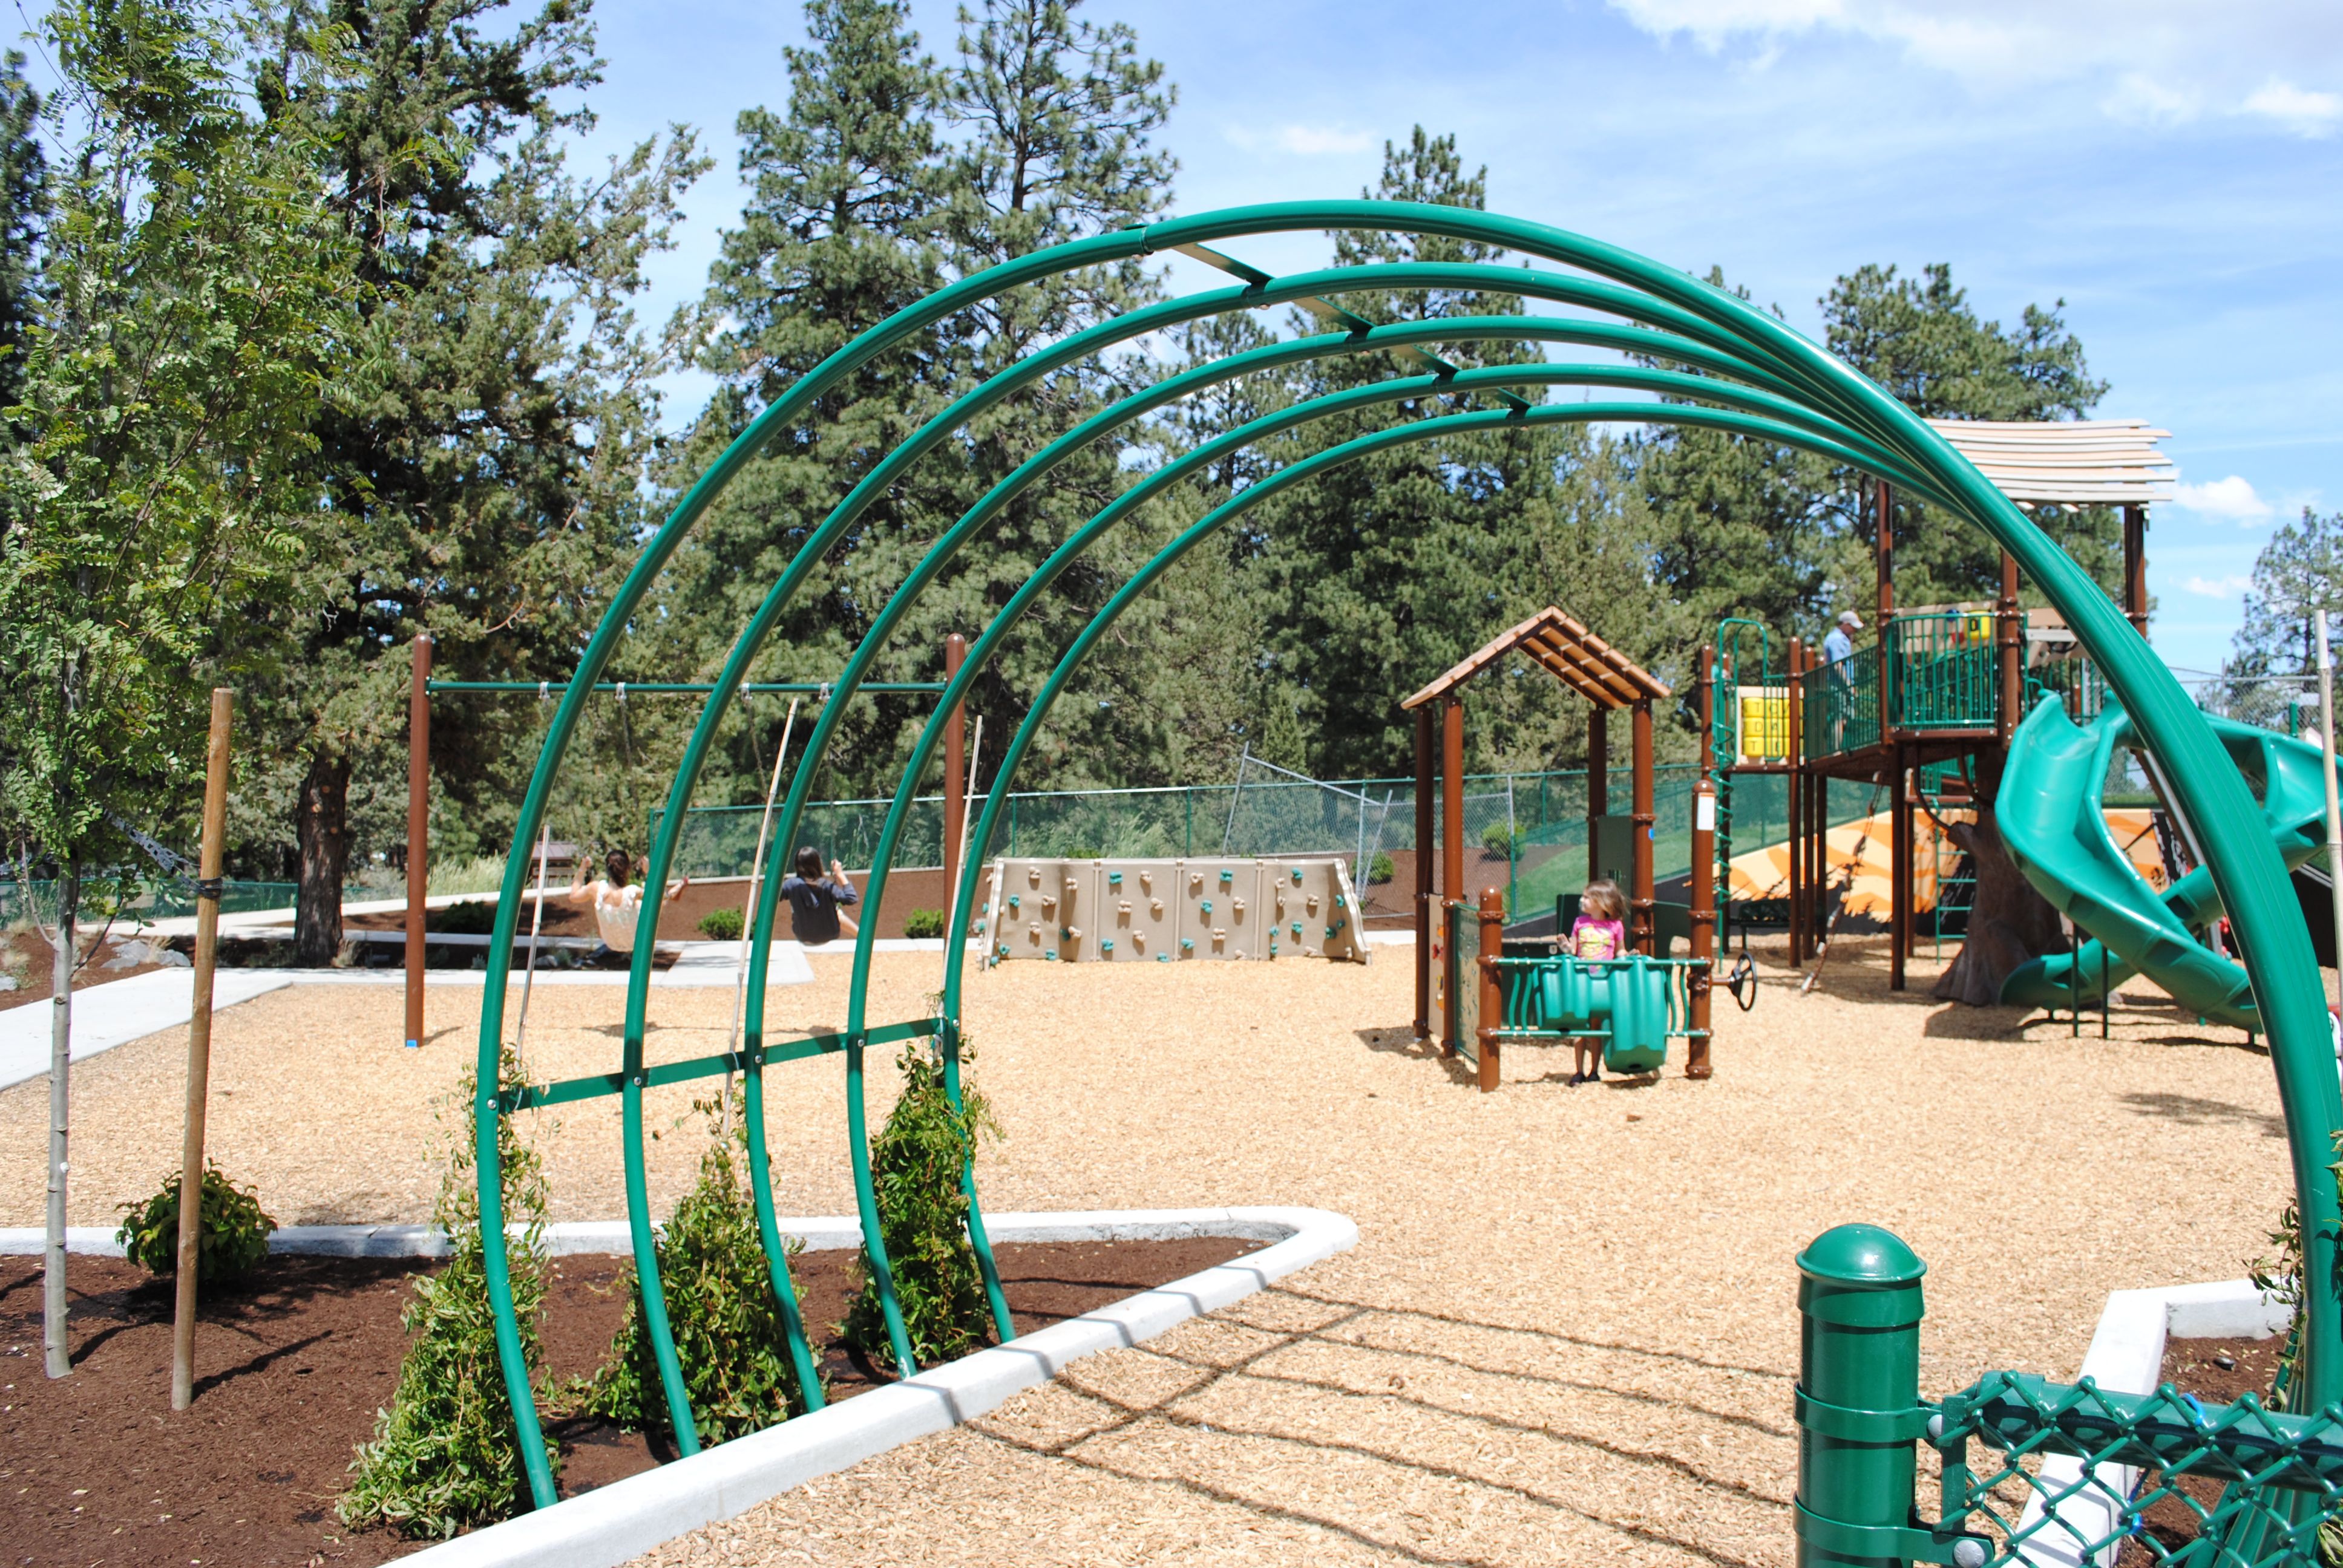 The playground at ponderosa park